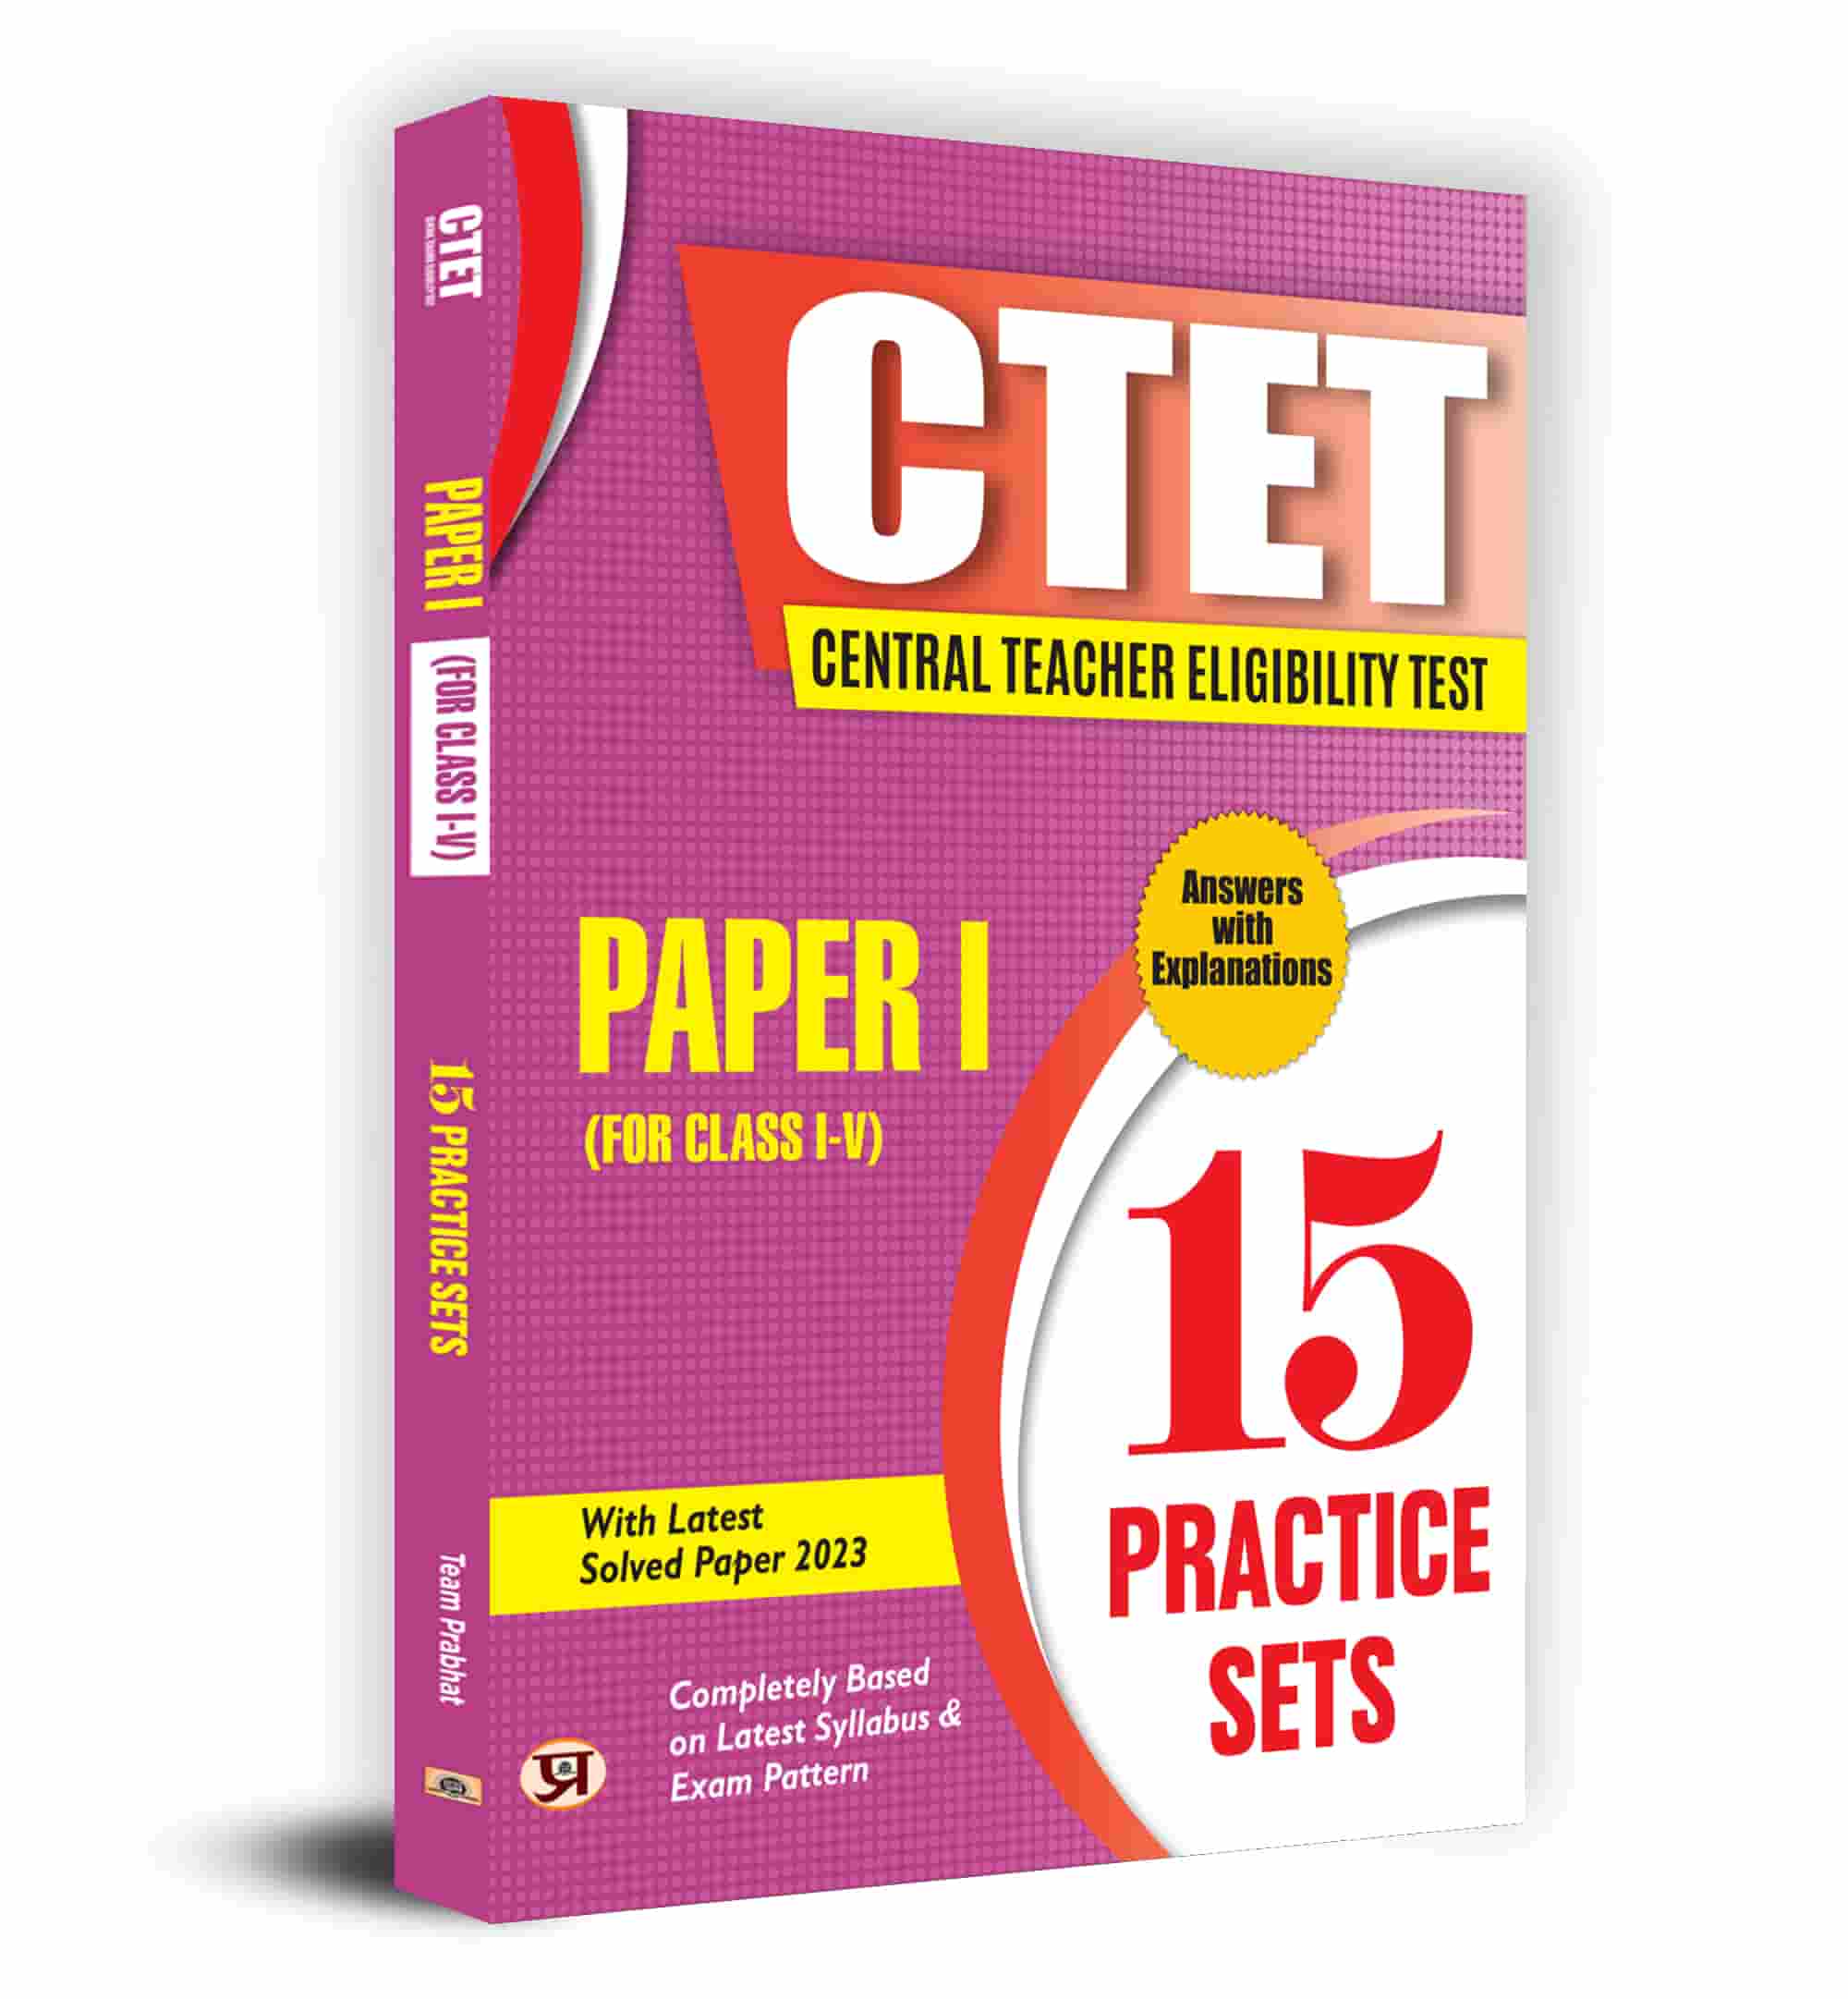 CTET Central Teacher Eligibility Test Paper-1 (Class I-V) 15 Practice ... 